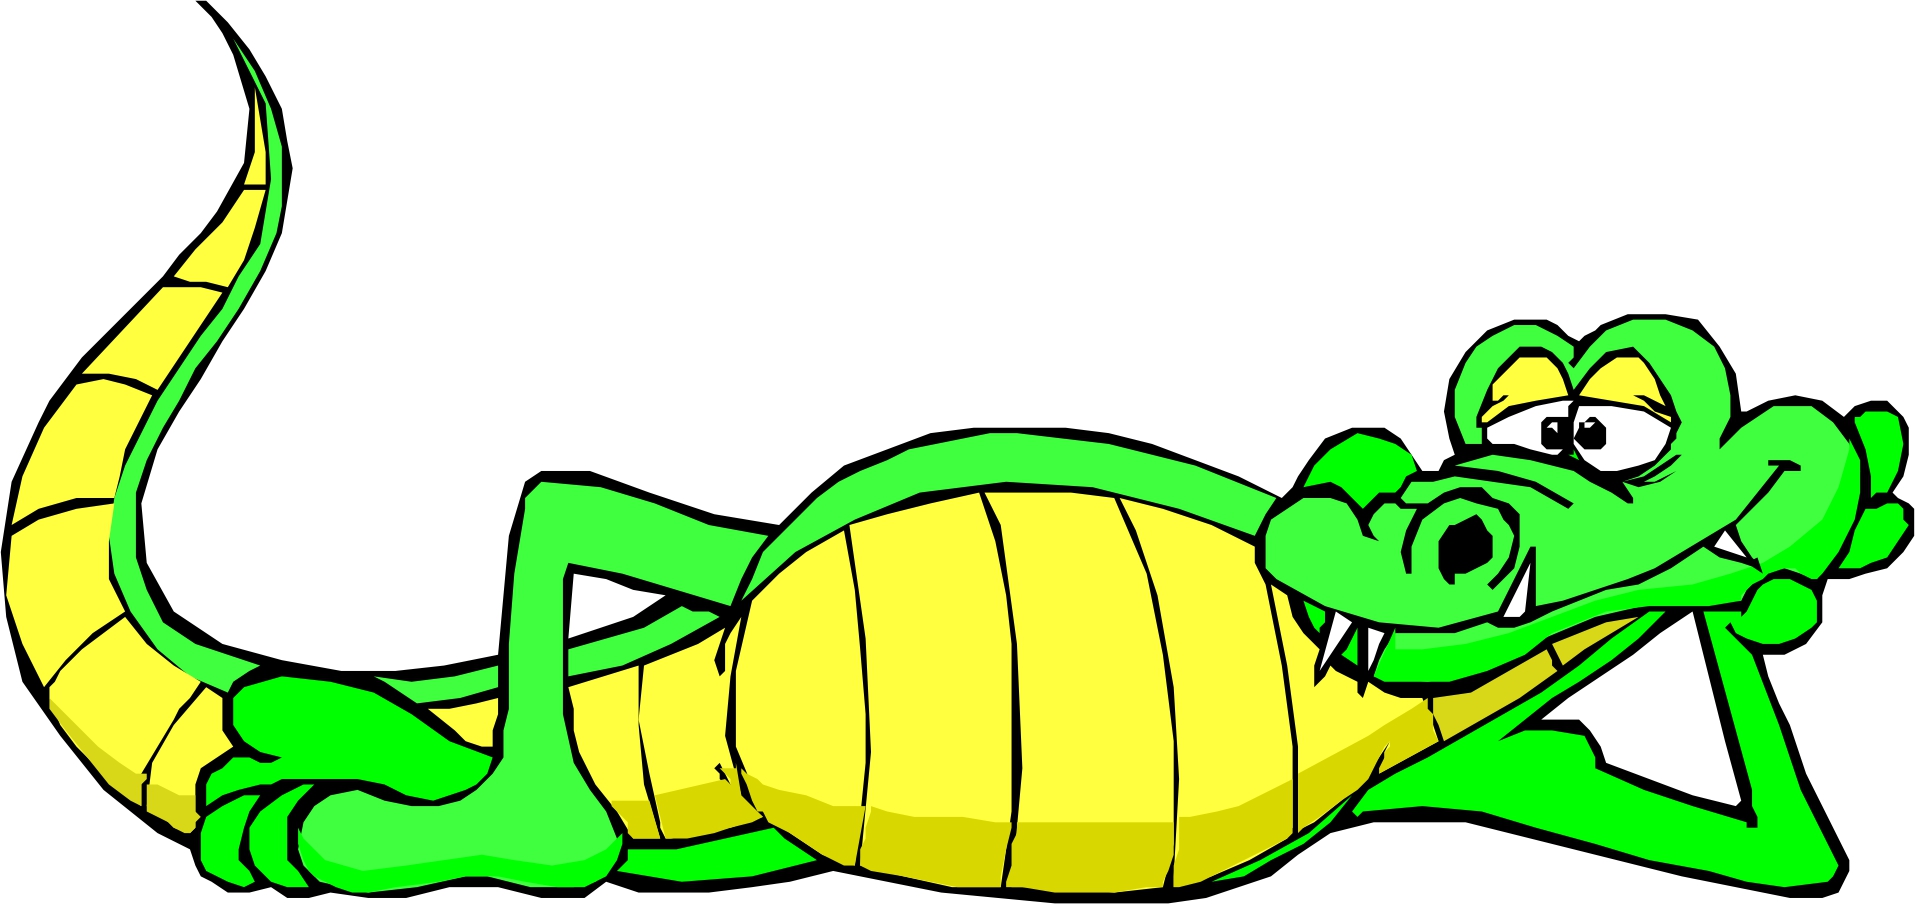 Images Of Cartoon Alligators - ClipArt Best